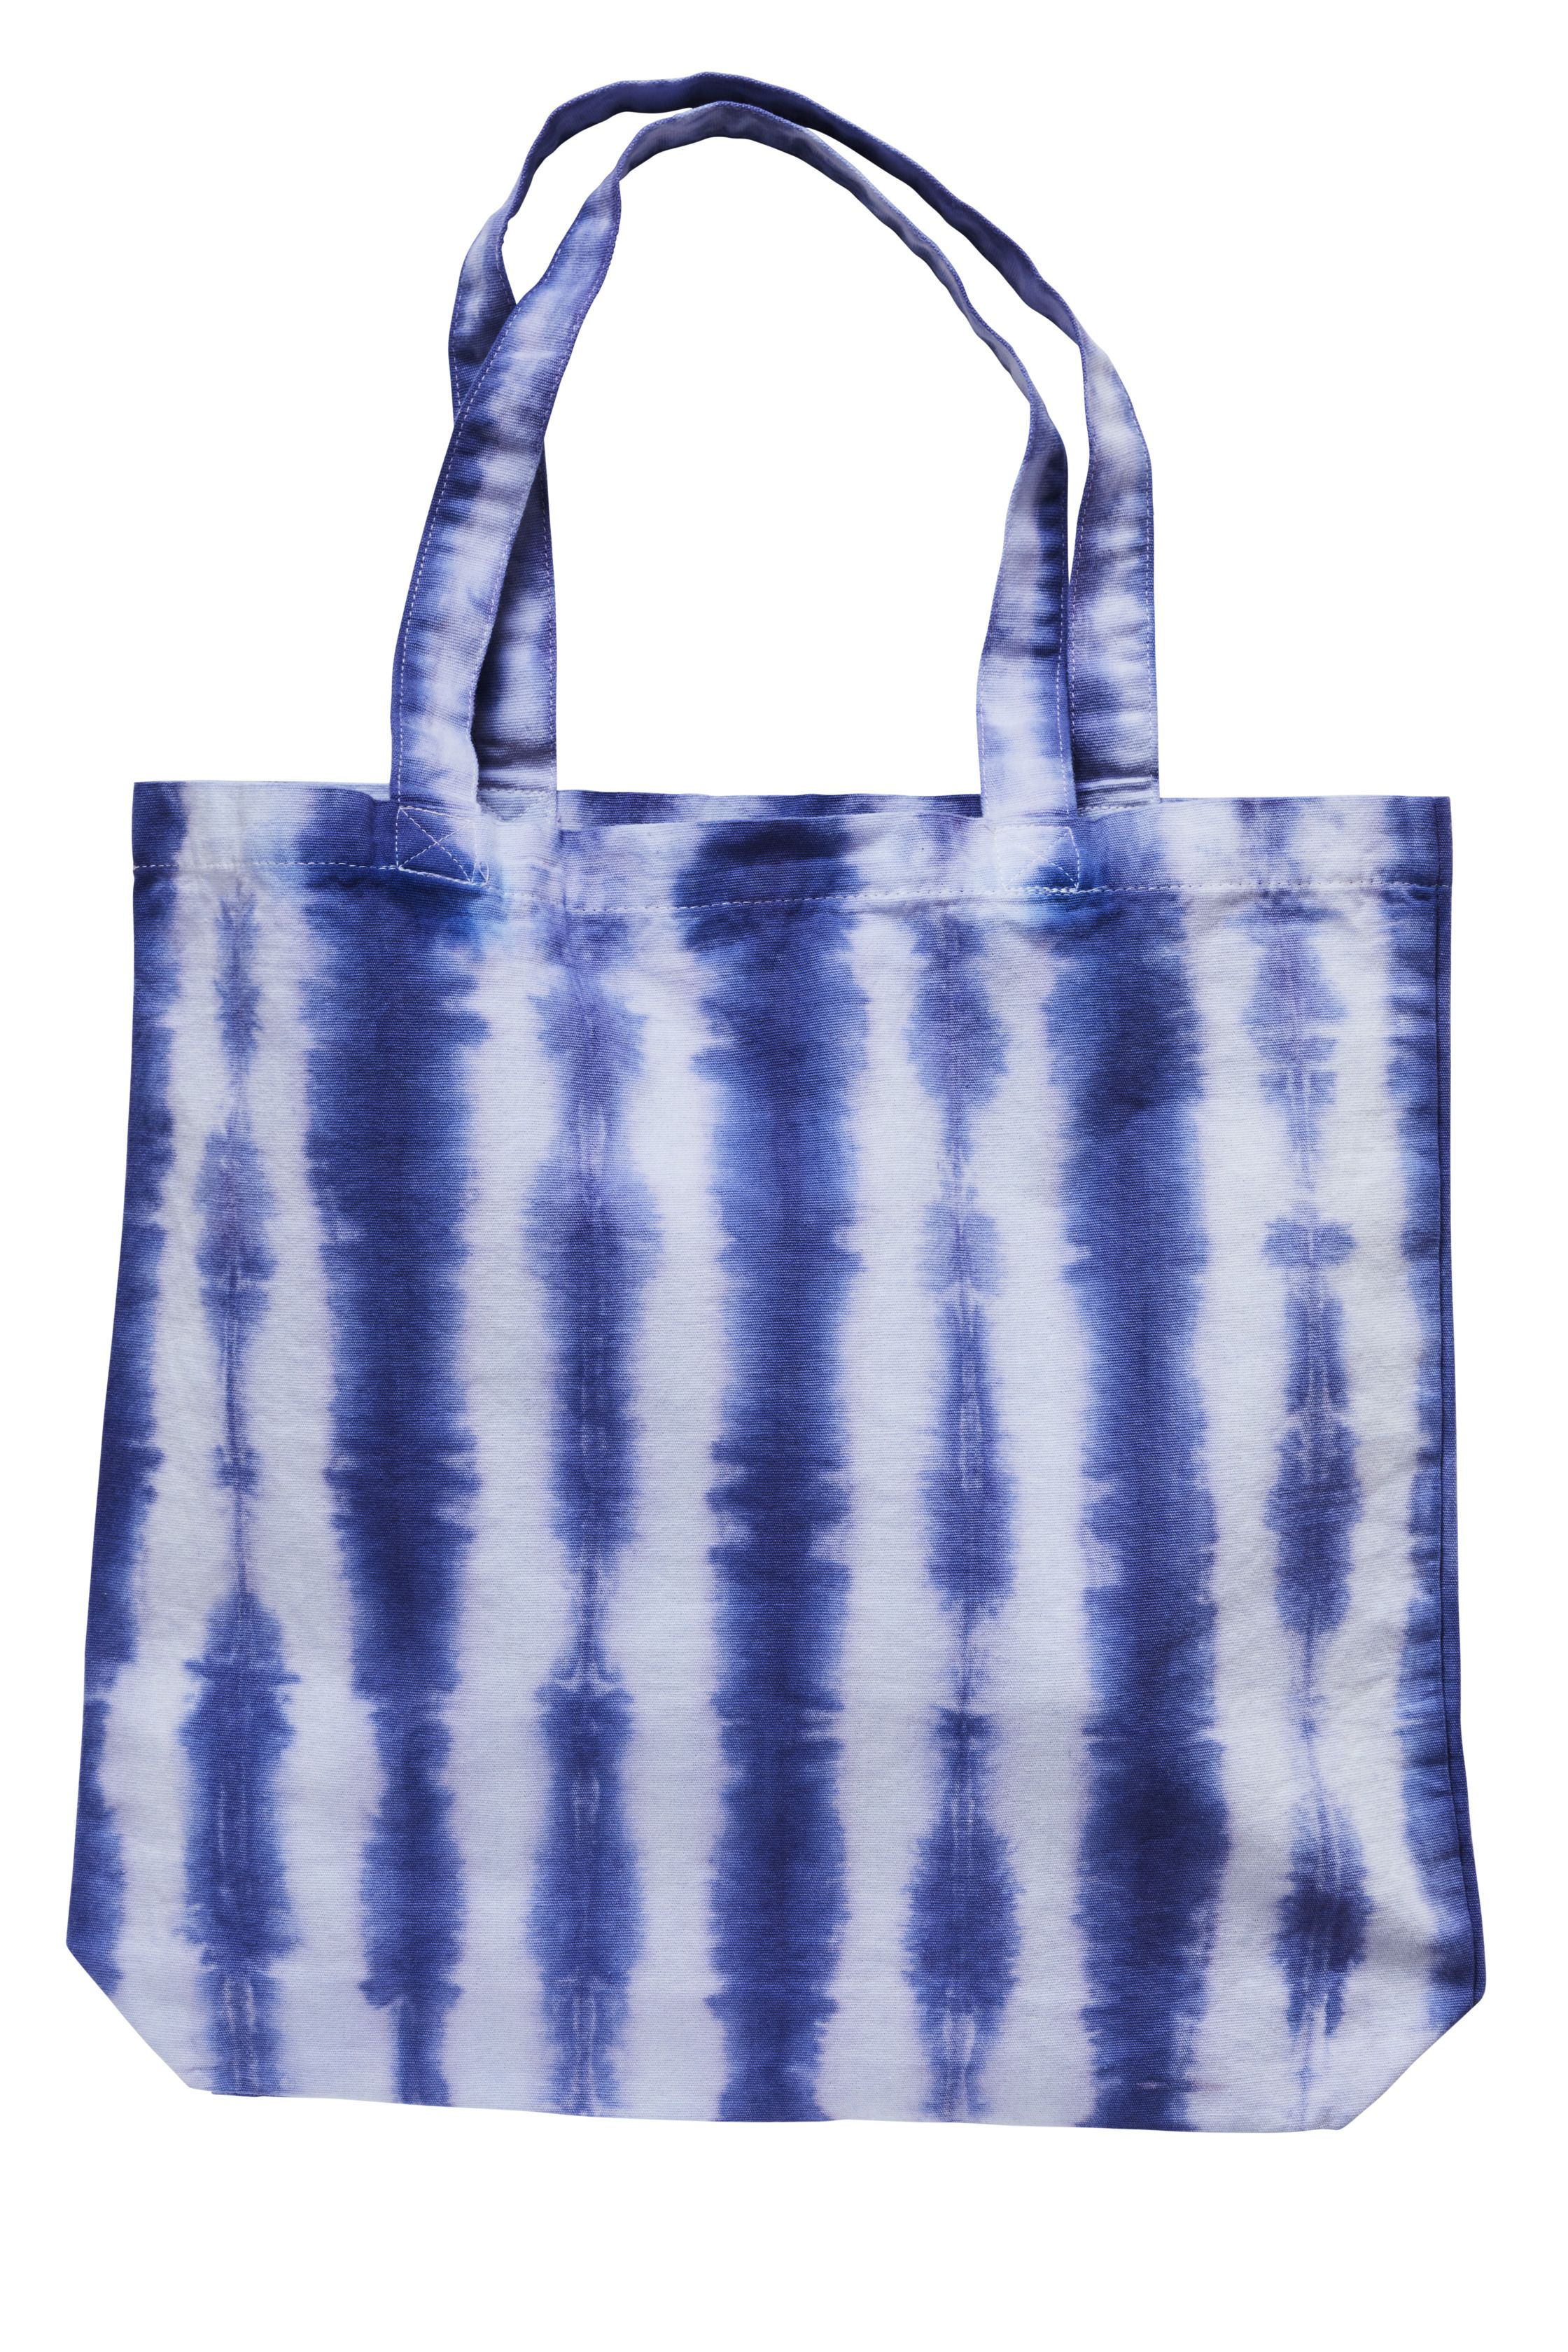 Buy Tie Dye Beach Bag Tye Dye Tote Cotton Canvas Carry All Online in India   Etsy